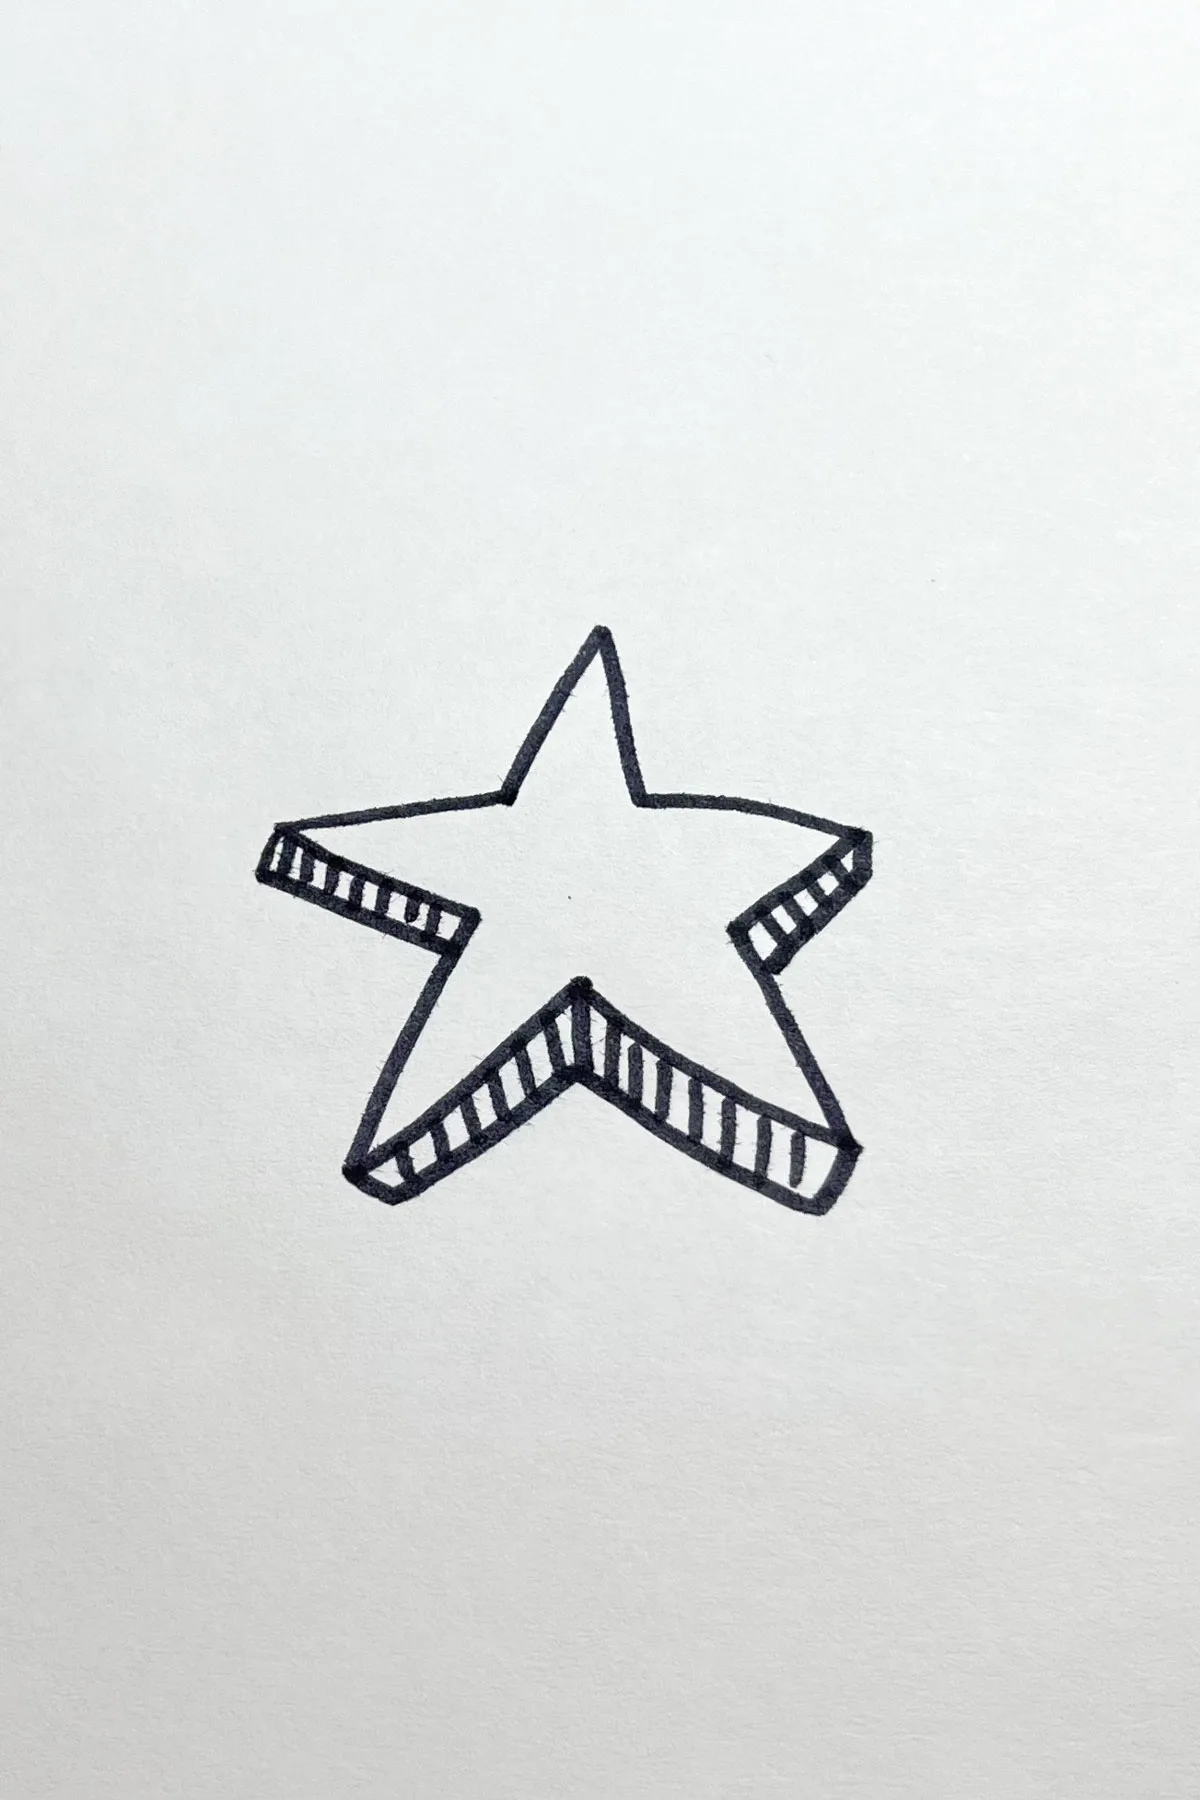 3D star drawing